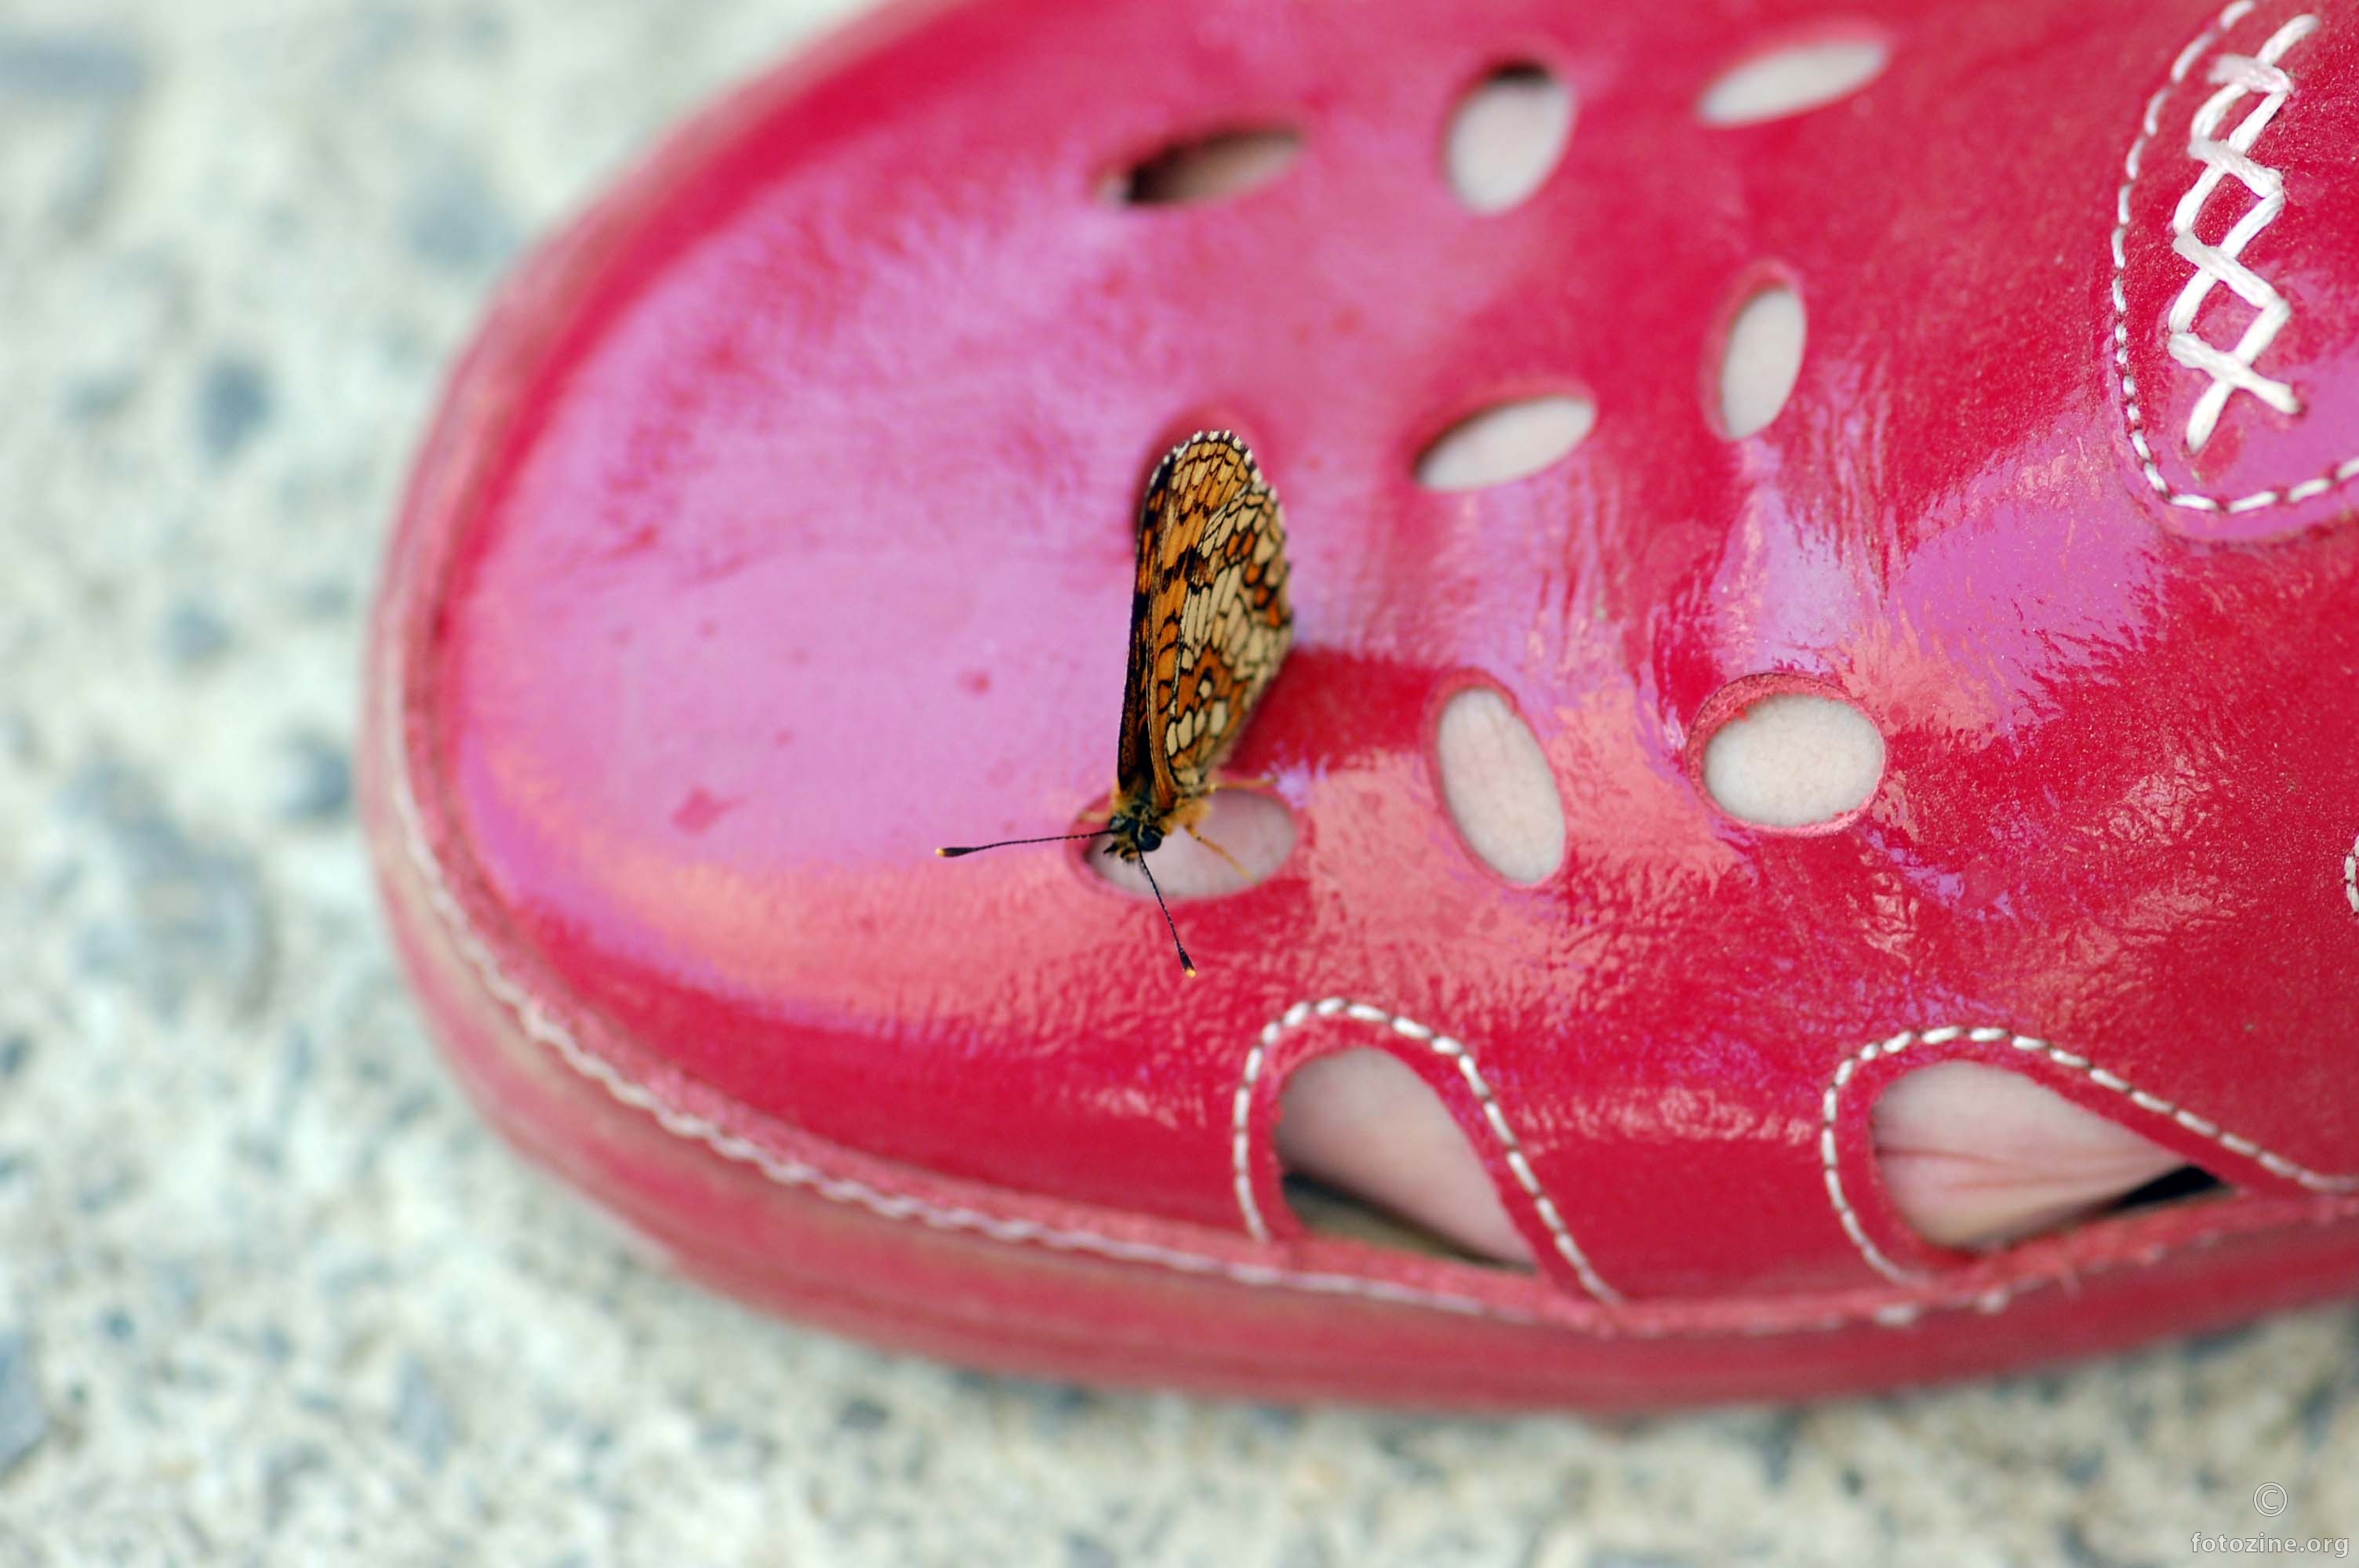 leptir voli cipele...